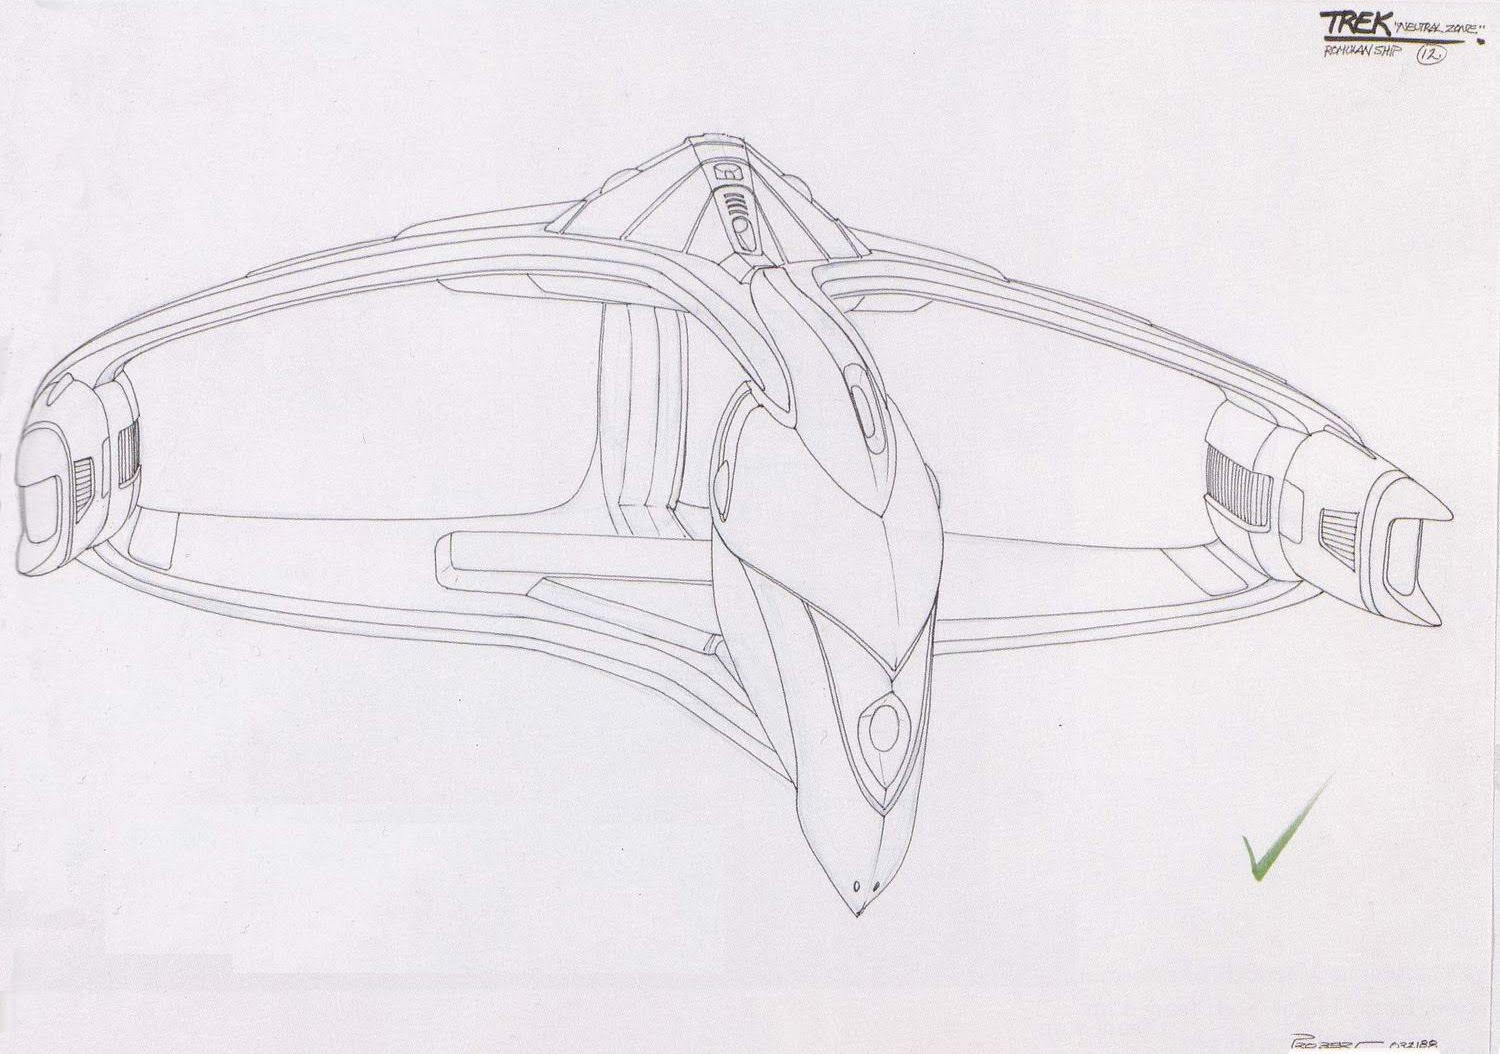 Romulan Warbird concept art